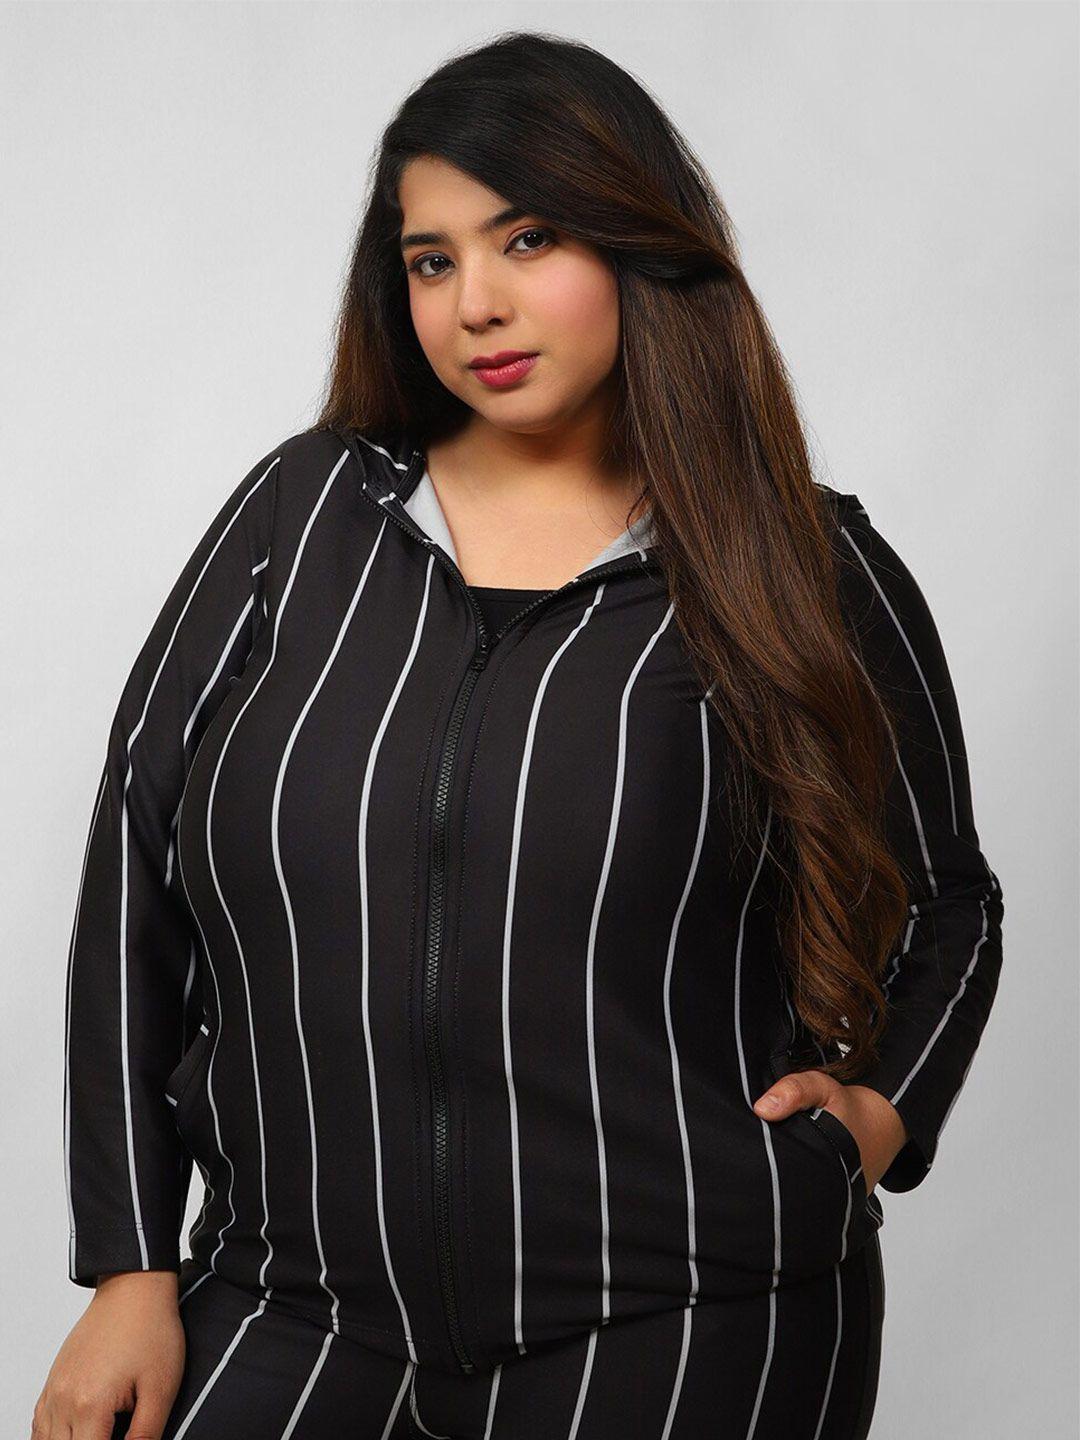 amydus-women-plus-size-black-white-striped-hooded-sweatshirt